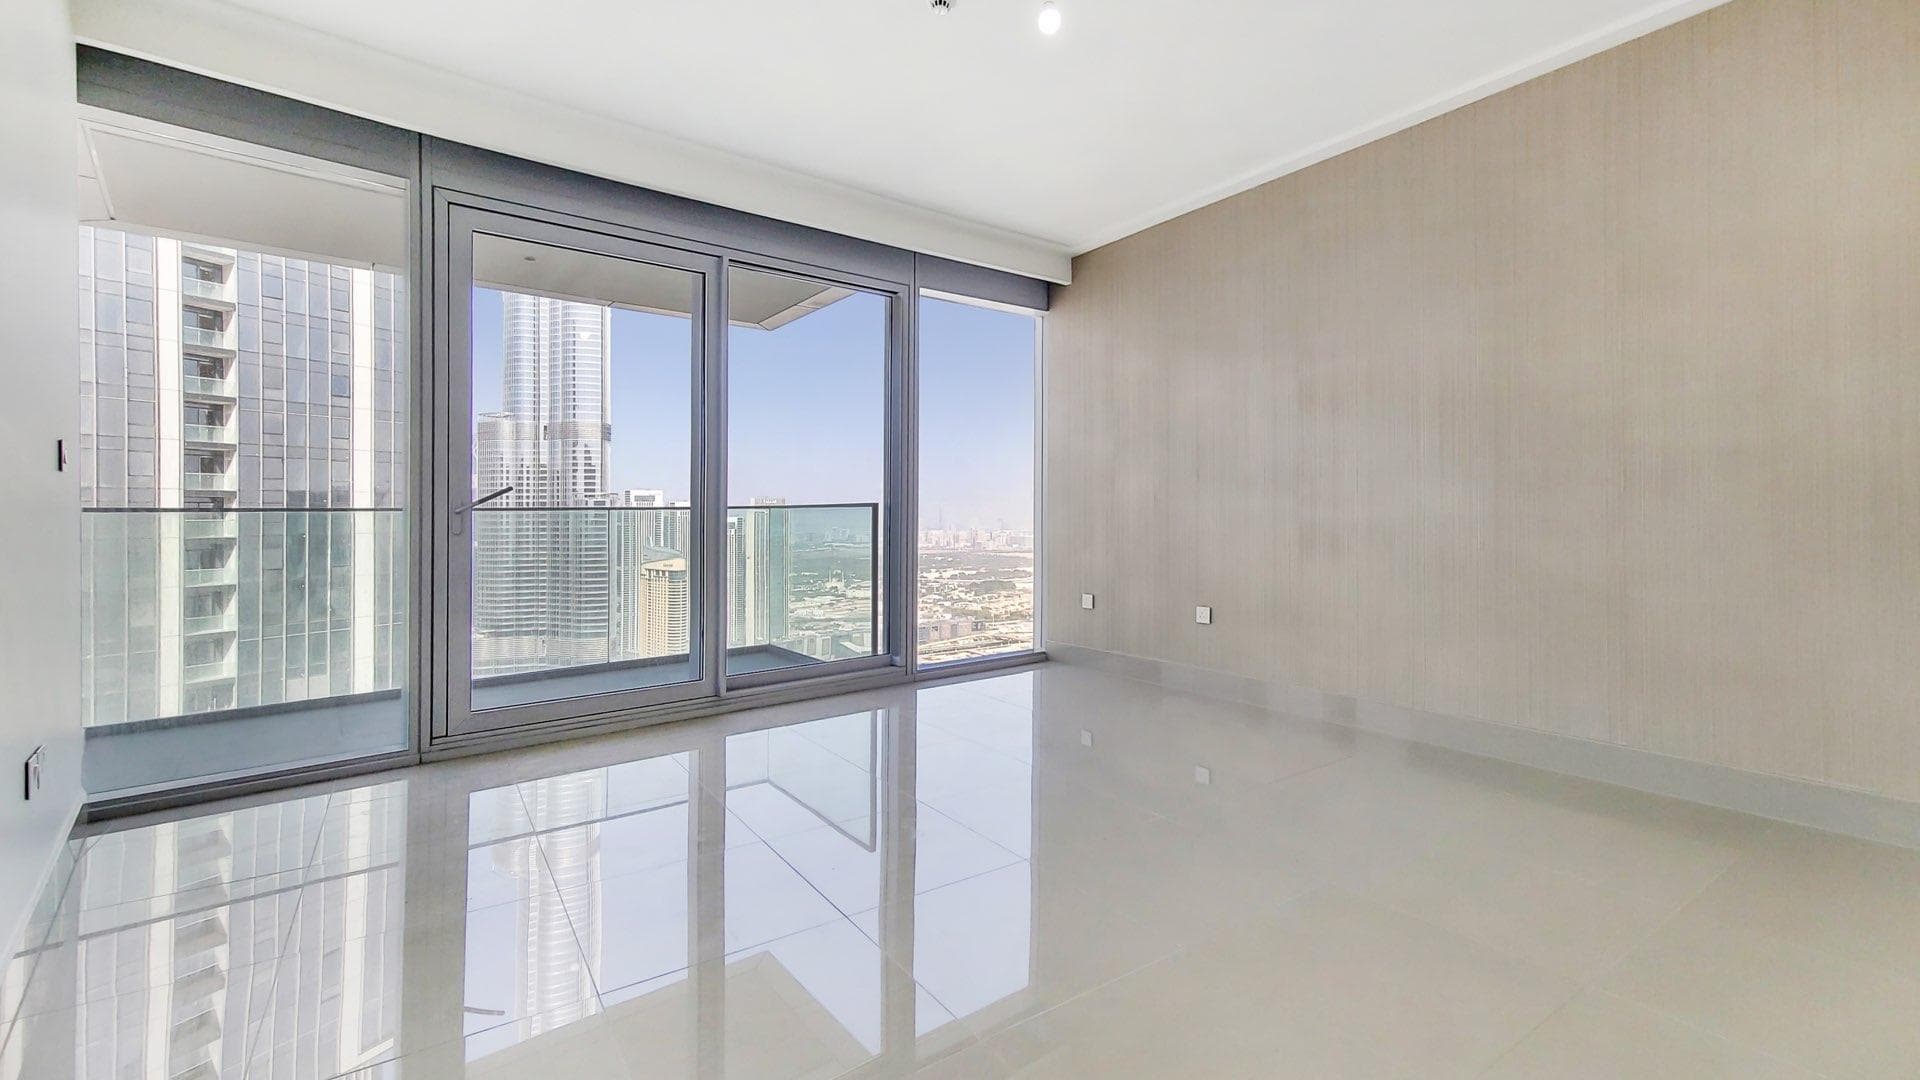 4 Bedroom Apartment For Sale Burj Khalifa Area Lp18333 17e7bdca68f16700.jpg